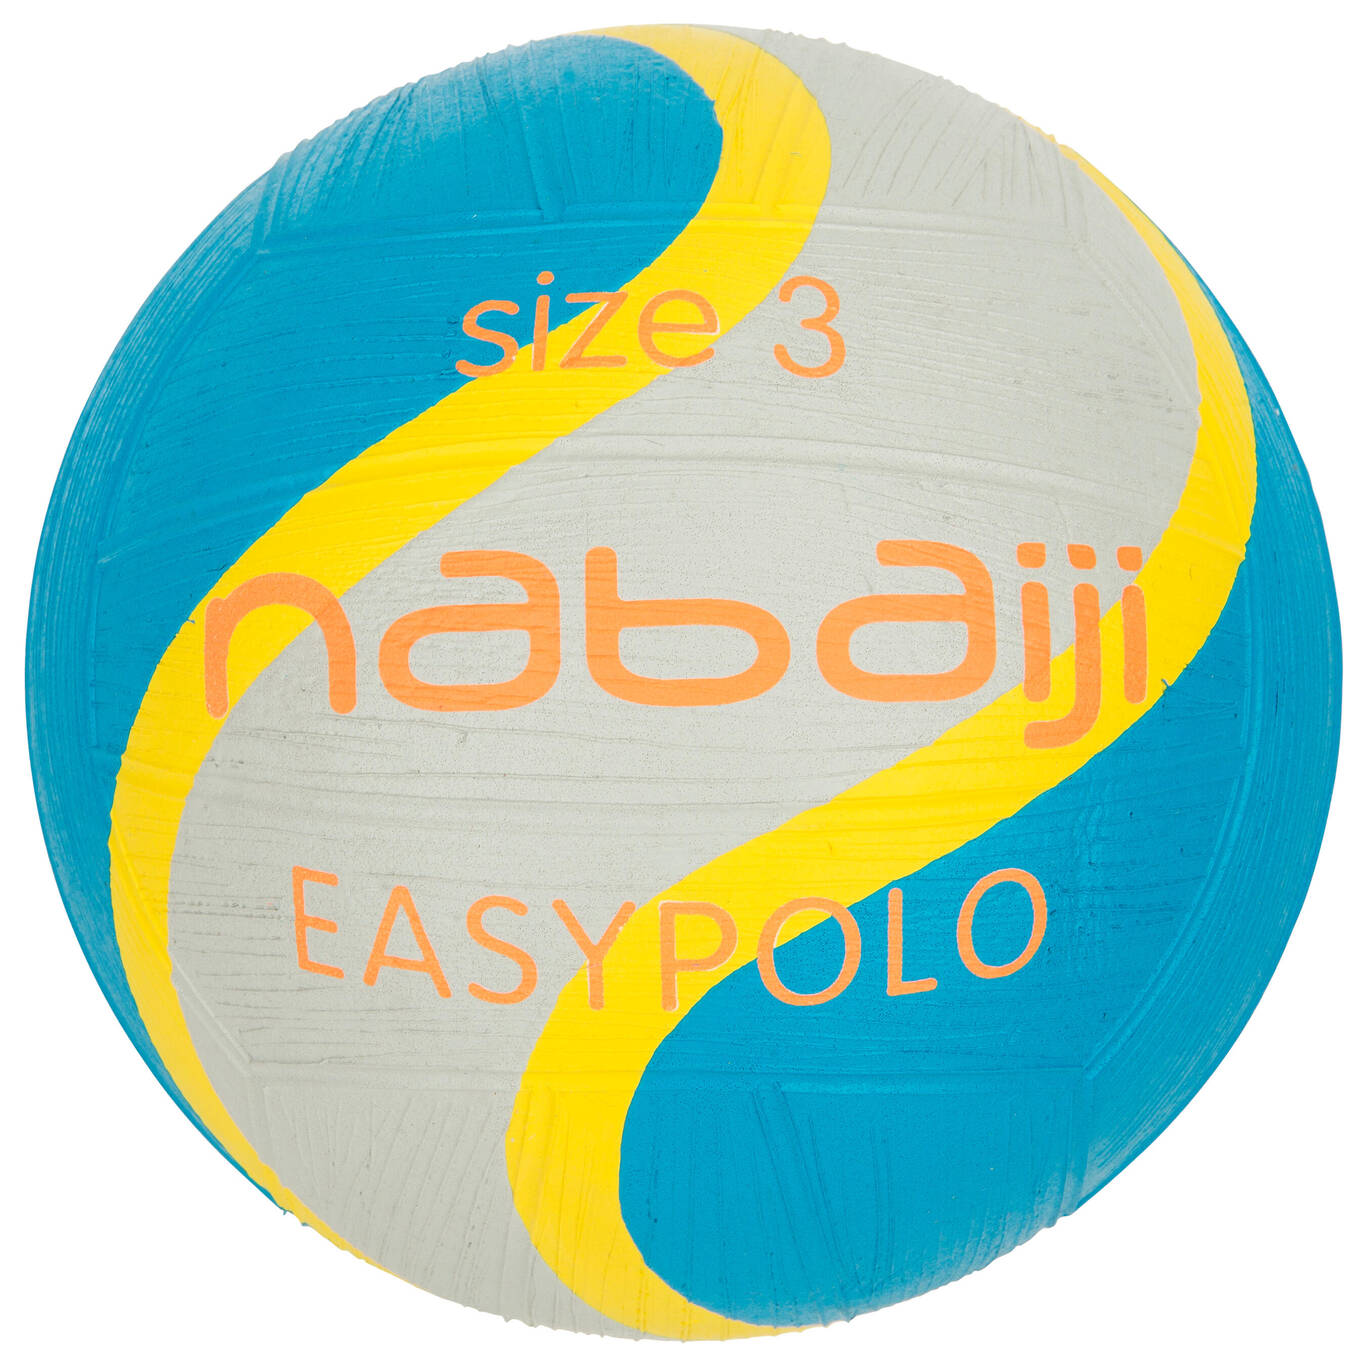 Easypolo ball Grey blue T3 Size 3